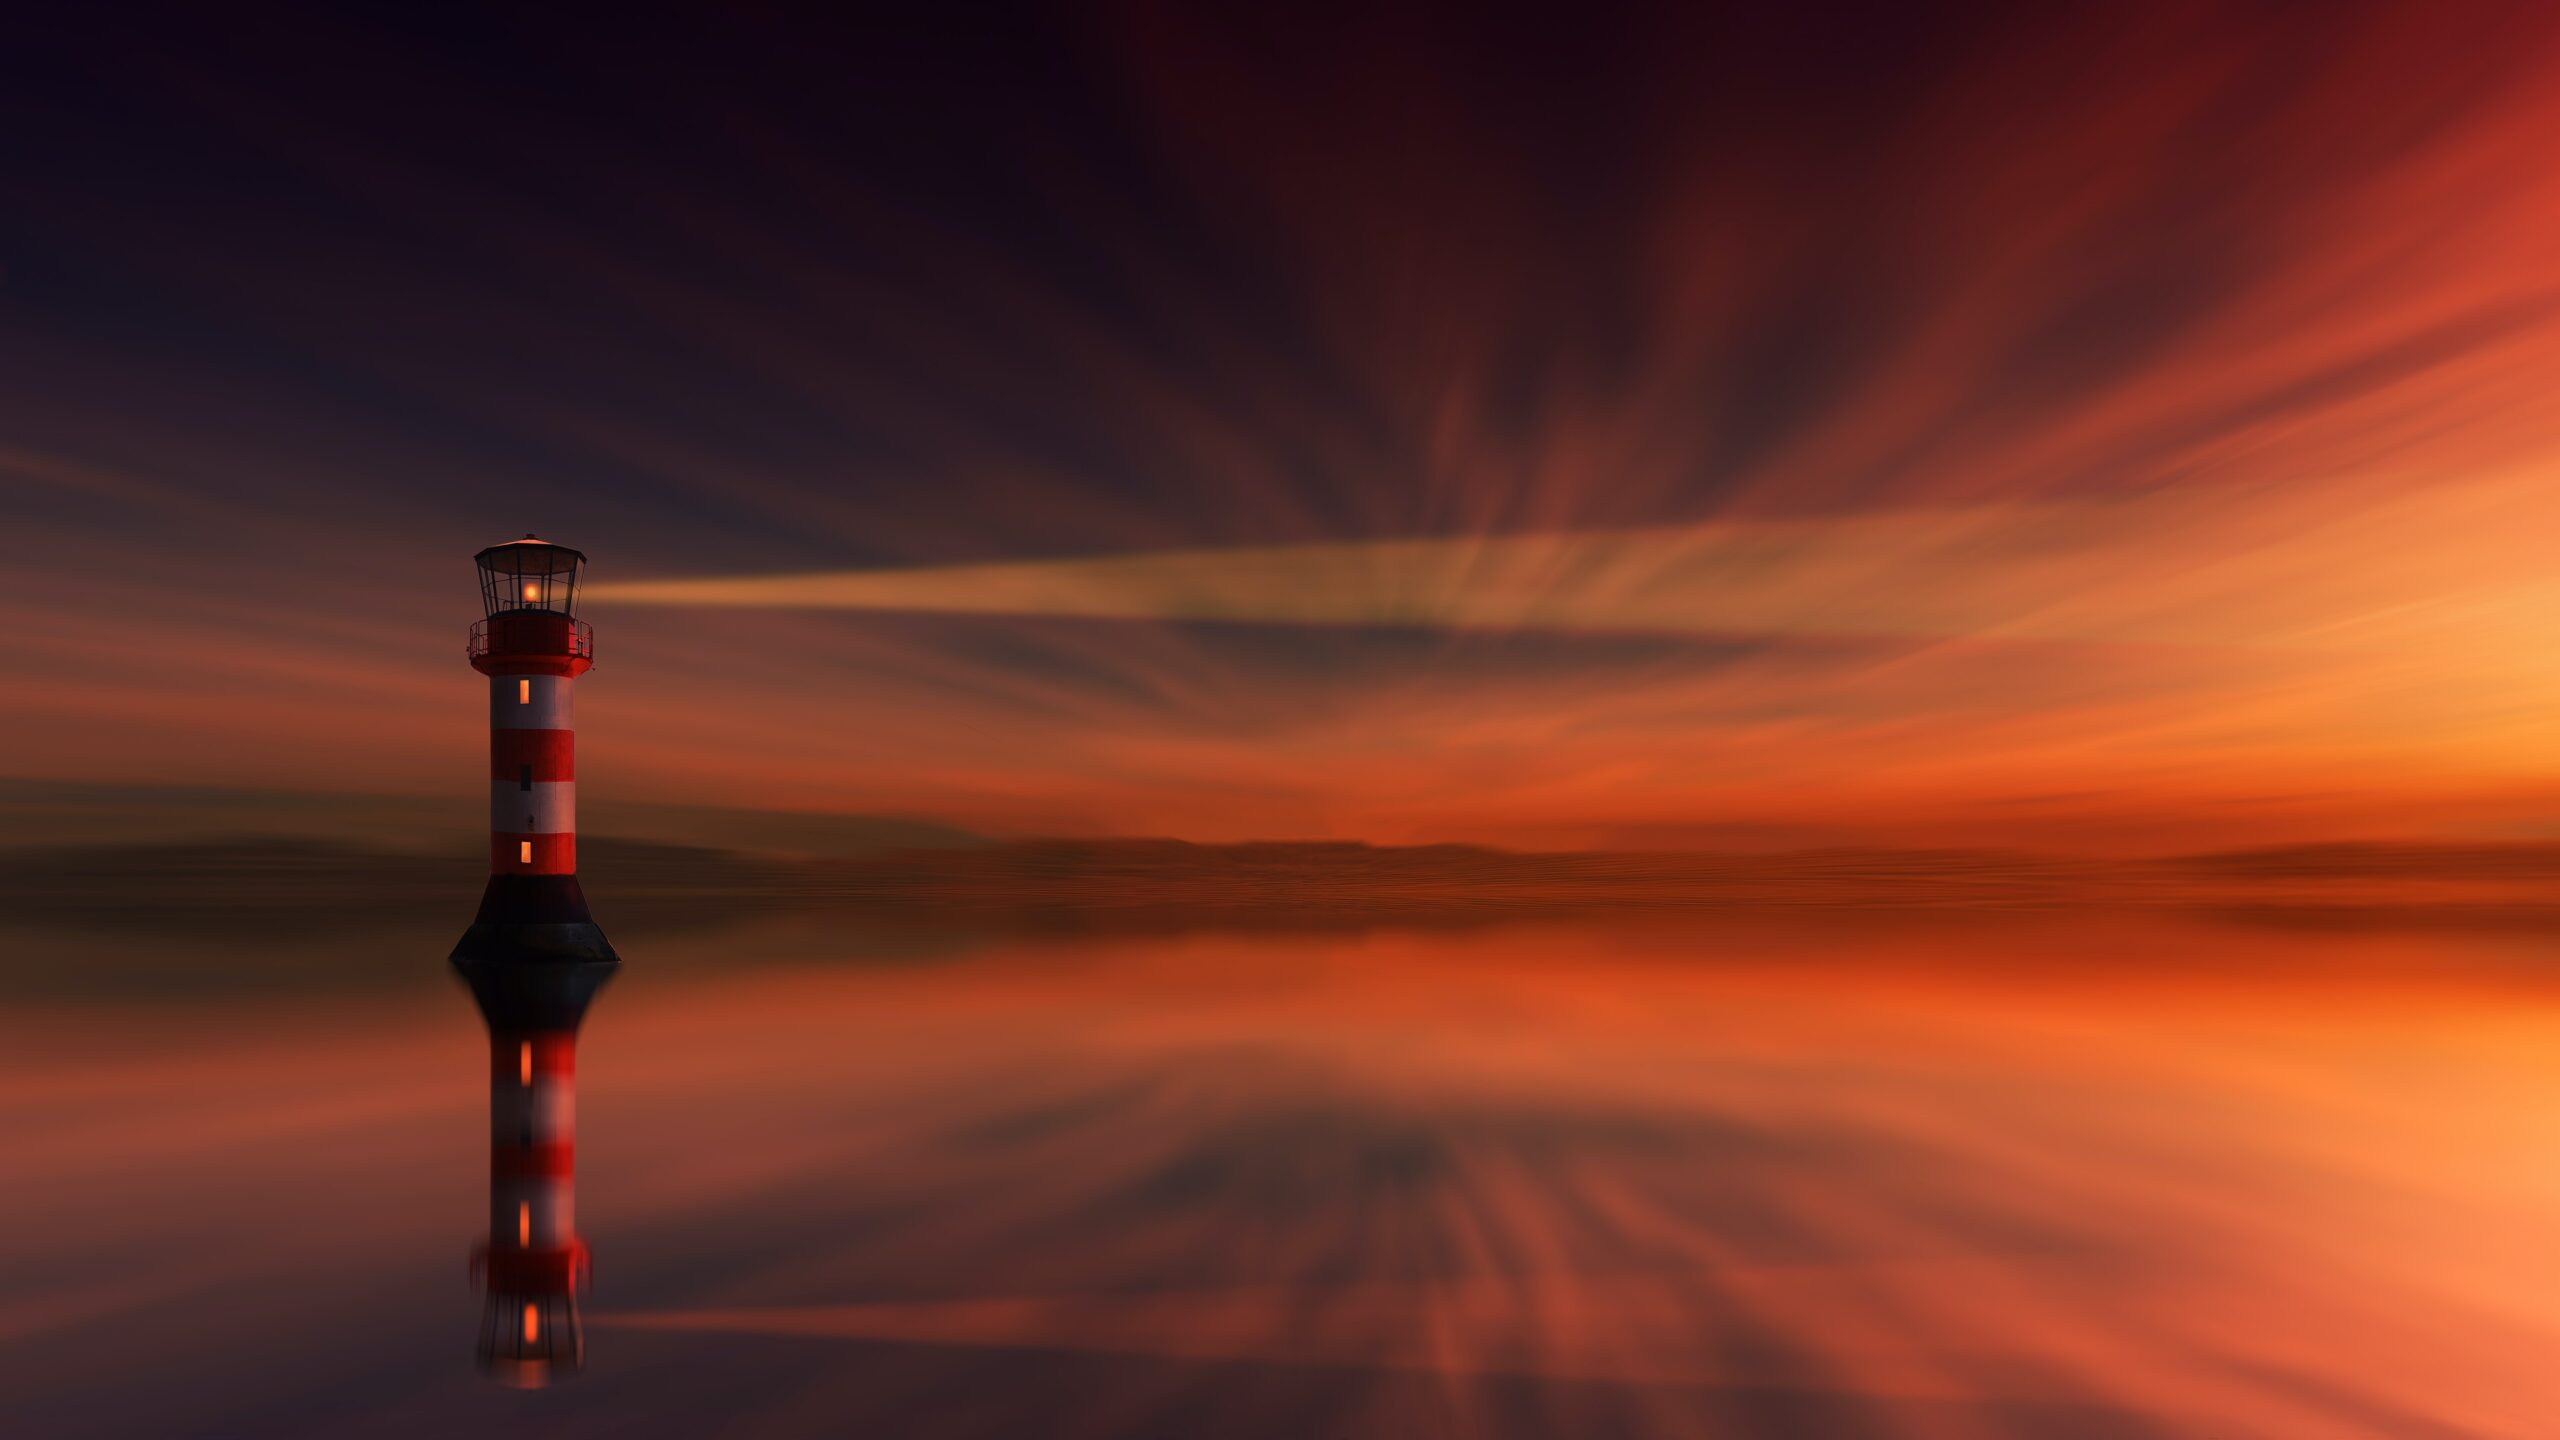 Lighthouse at night, bathed in orange light